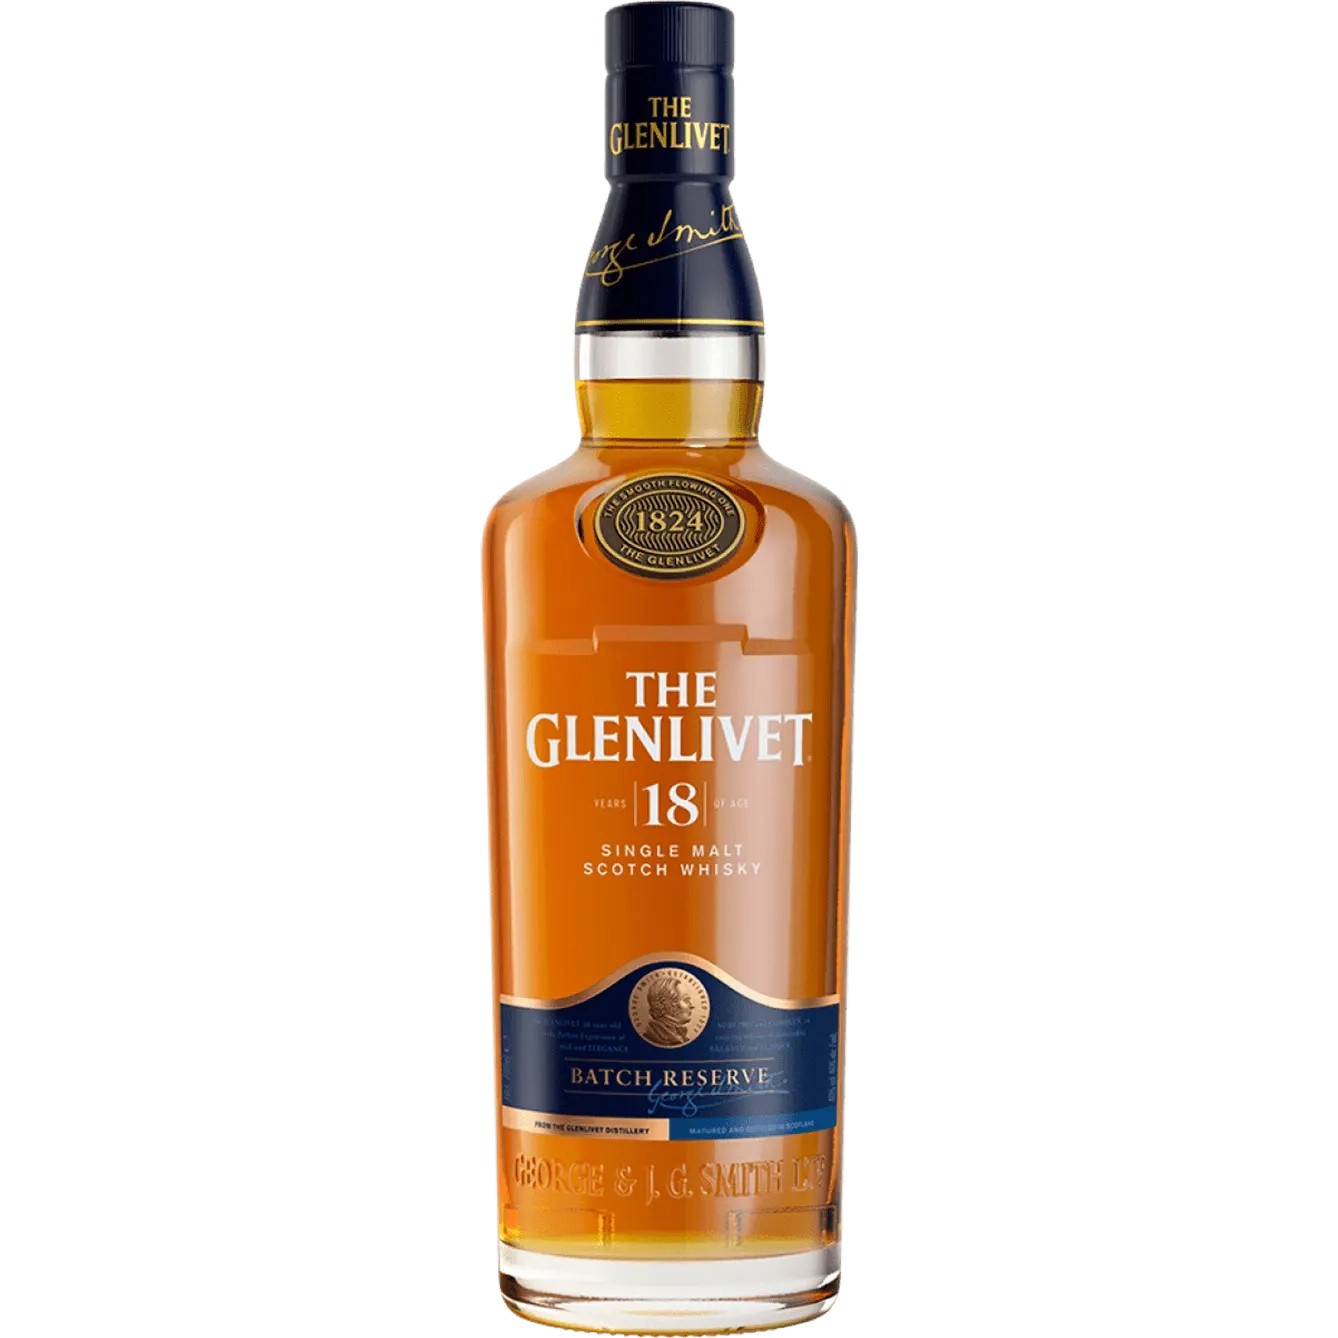 The Glenlivet 18 Year Old - Batch Reserve - Single Malt Scotch Whisky-Single Malt Scotch Whisky-080432403105-Fountainhall Wines